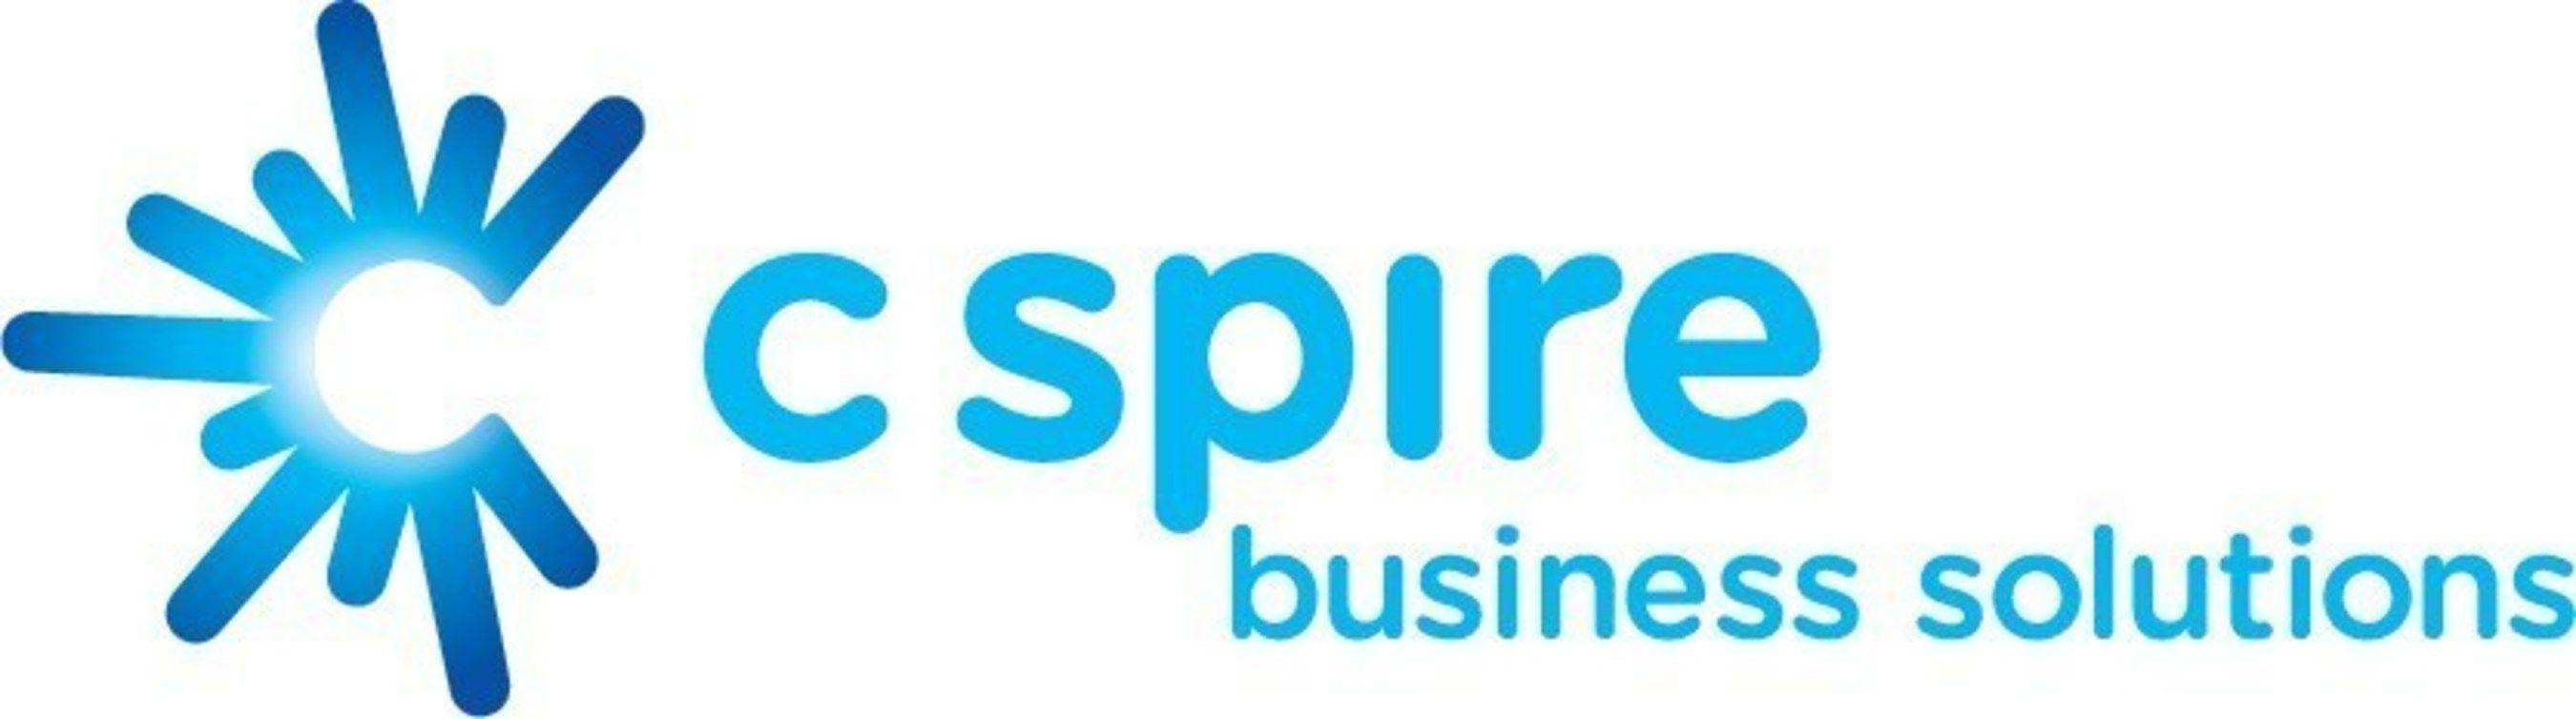 Boost C Logo - C Spire Business Solutions™ debuts its new Advantage Fiber program ...